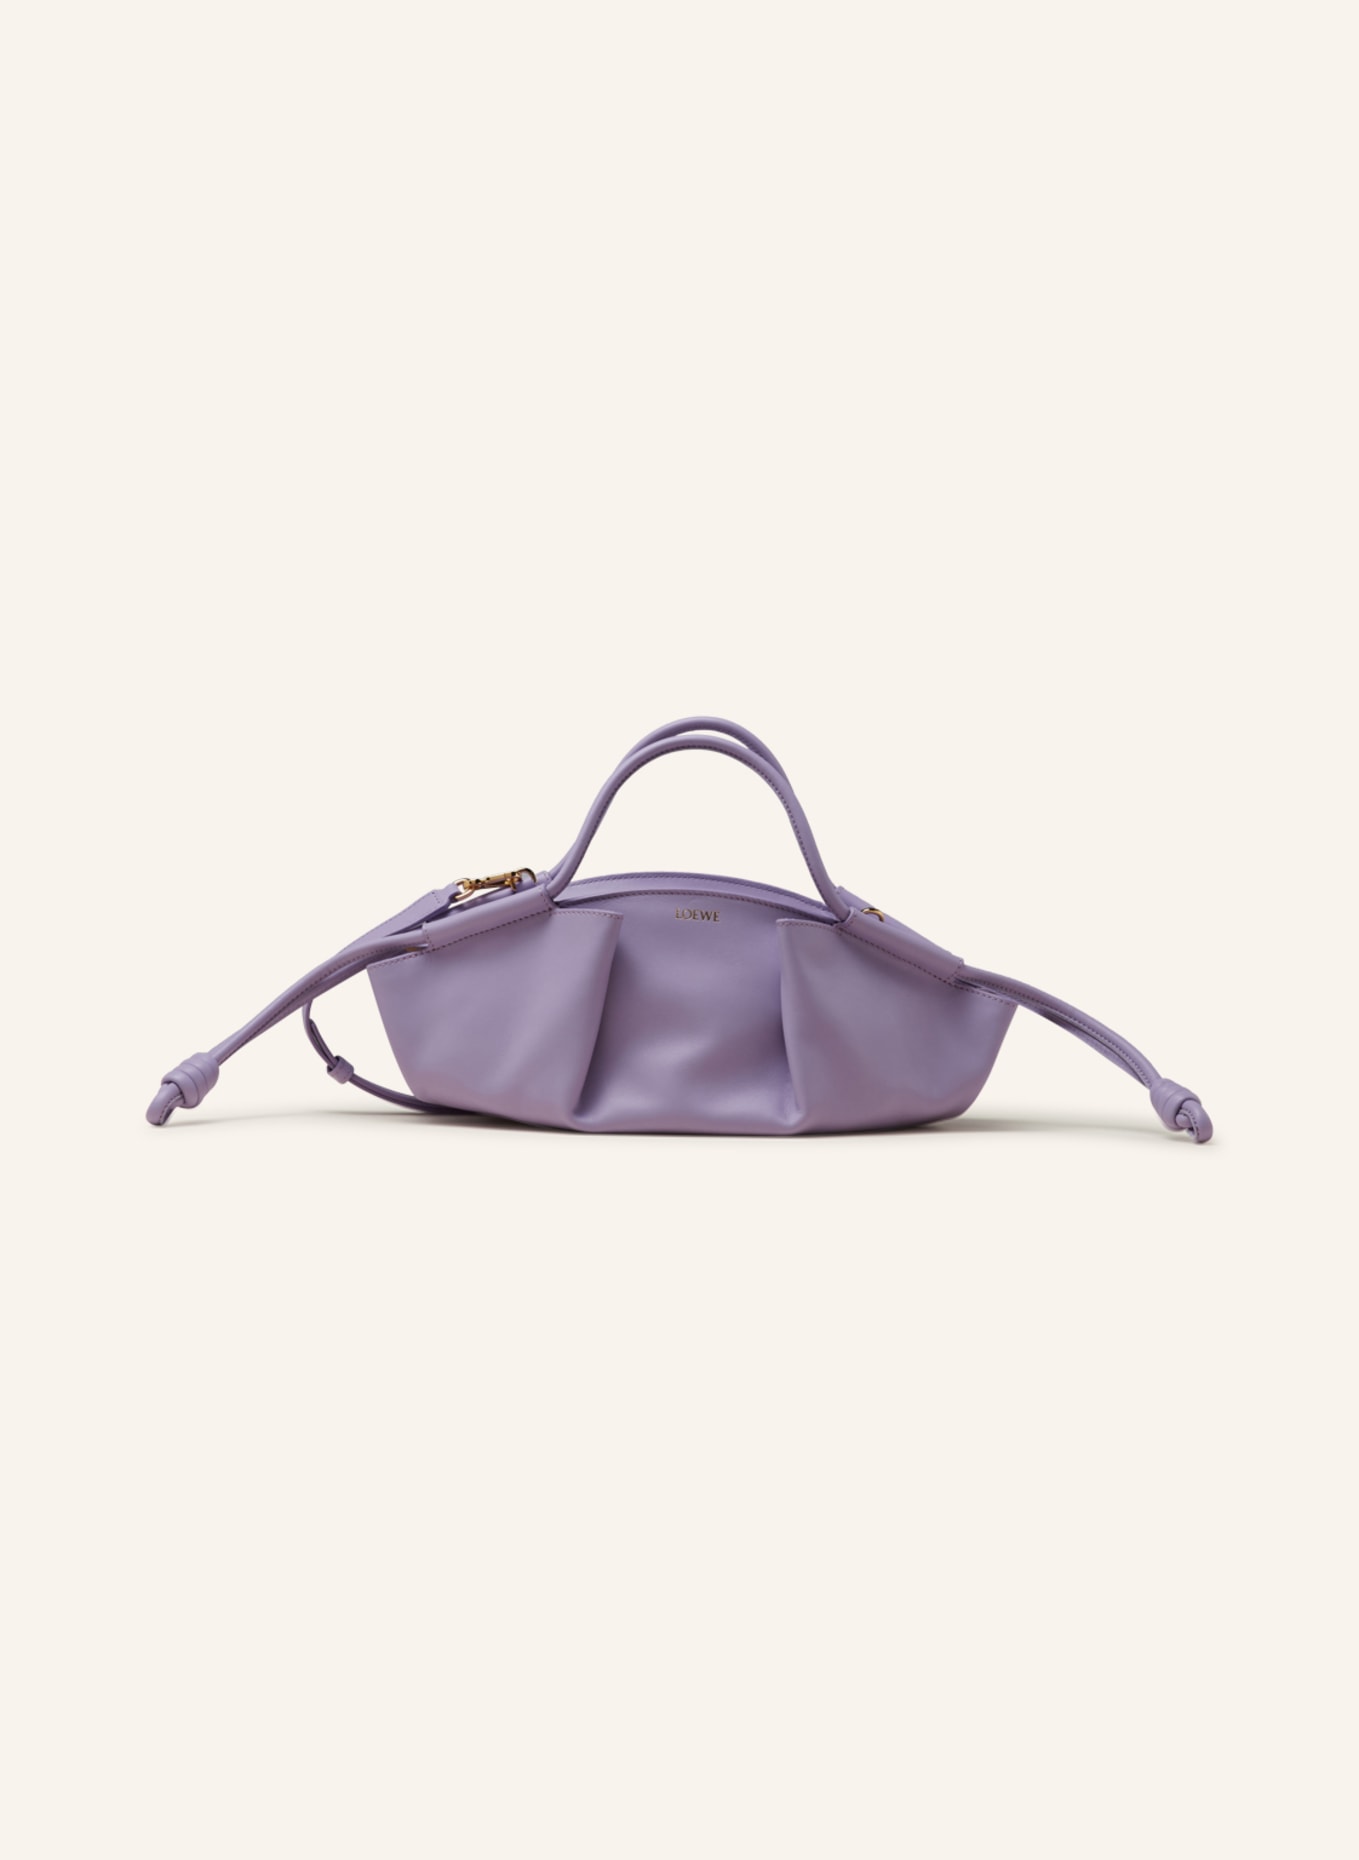 LOEWE Handtasche PASEO SMALL, Farbe: HELLLILA (Bild 1)